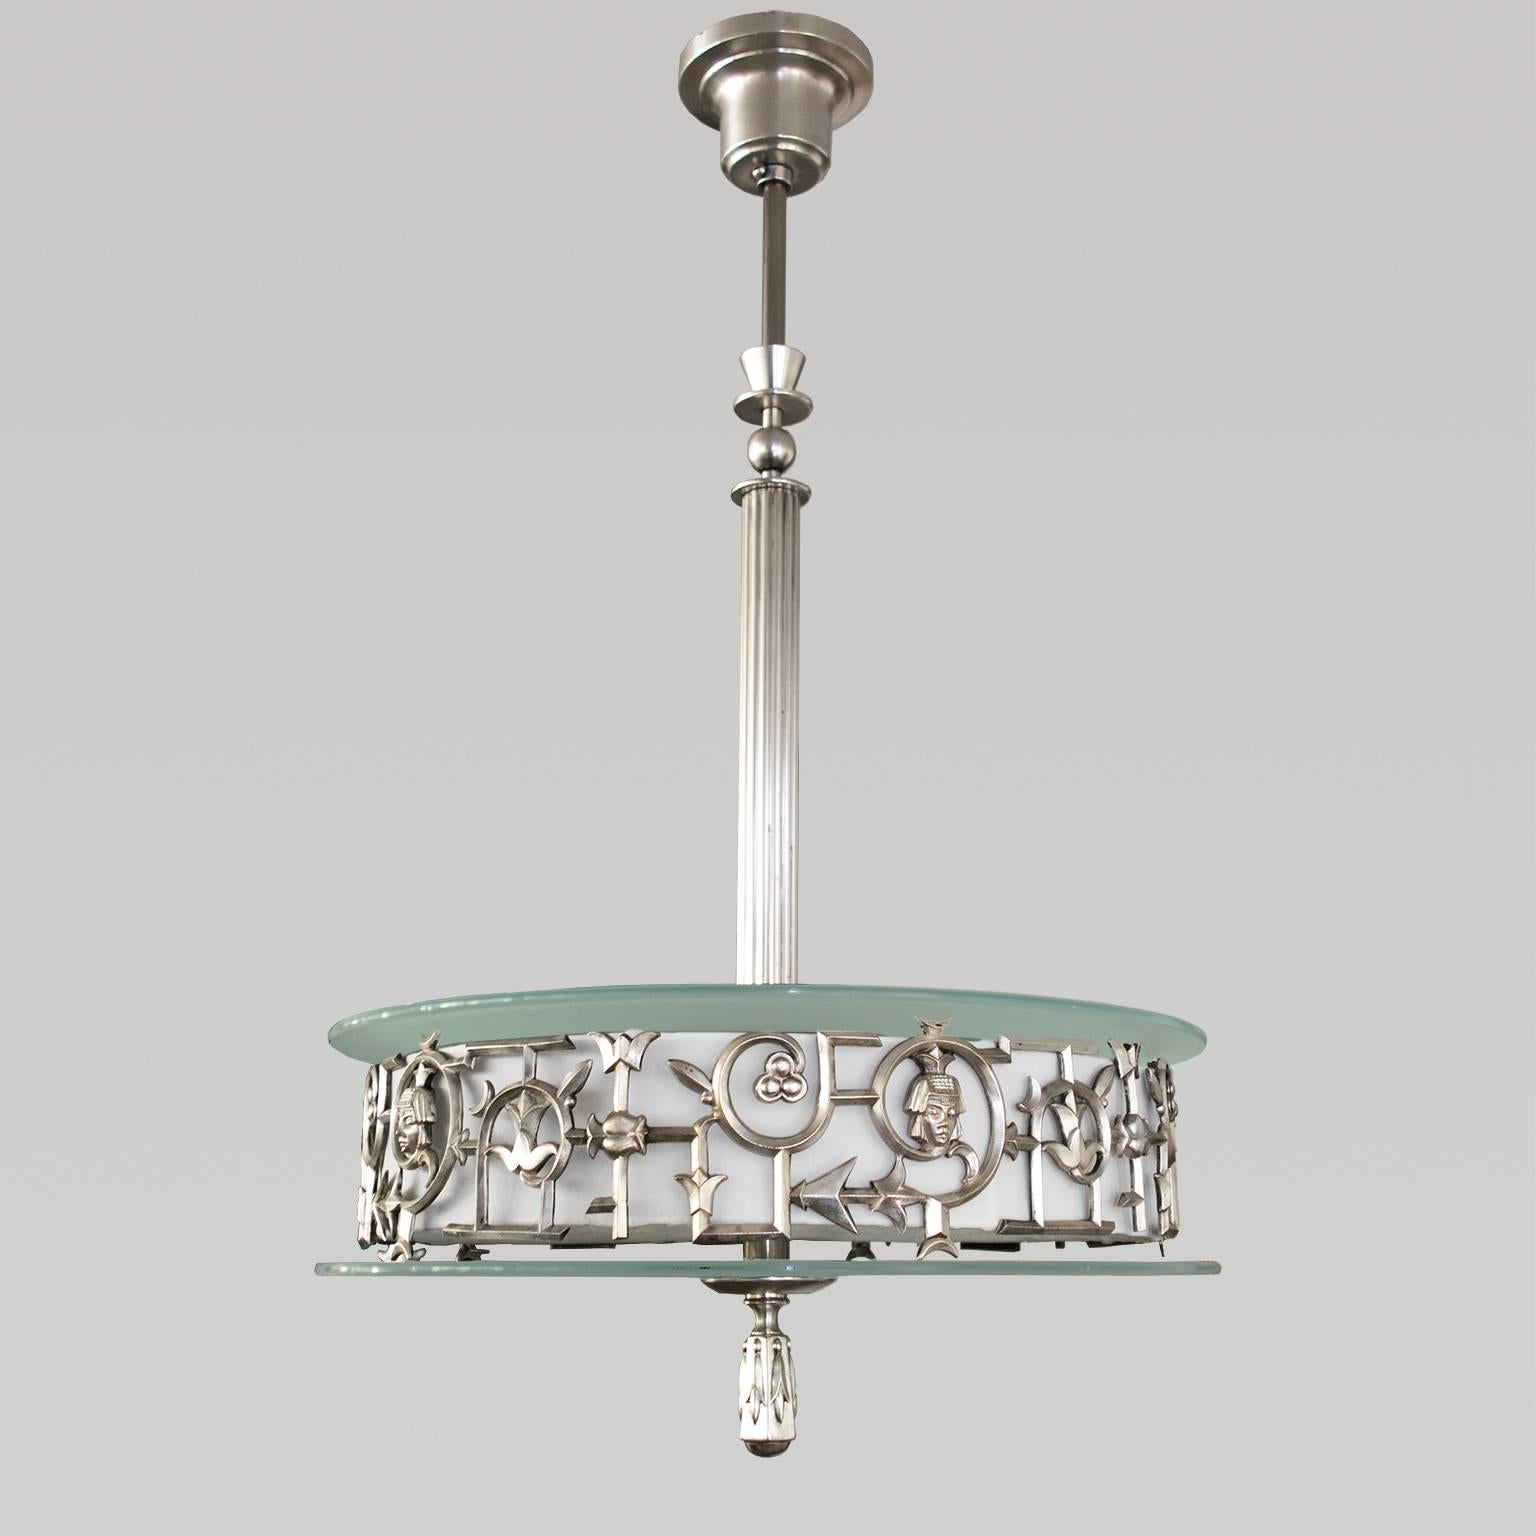 Silvered Scandinavian Modern Art Deco Pendant Silver Plate Grillwork, Stem and Canopy